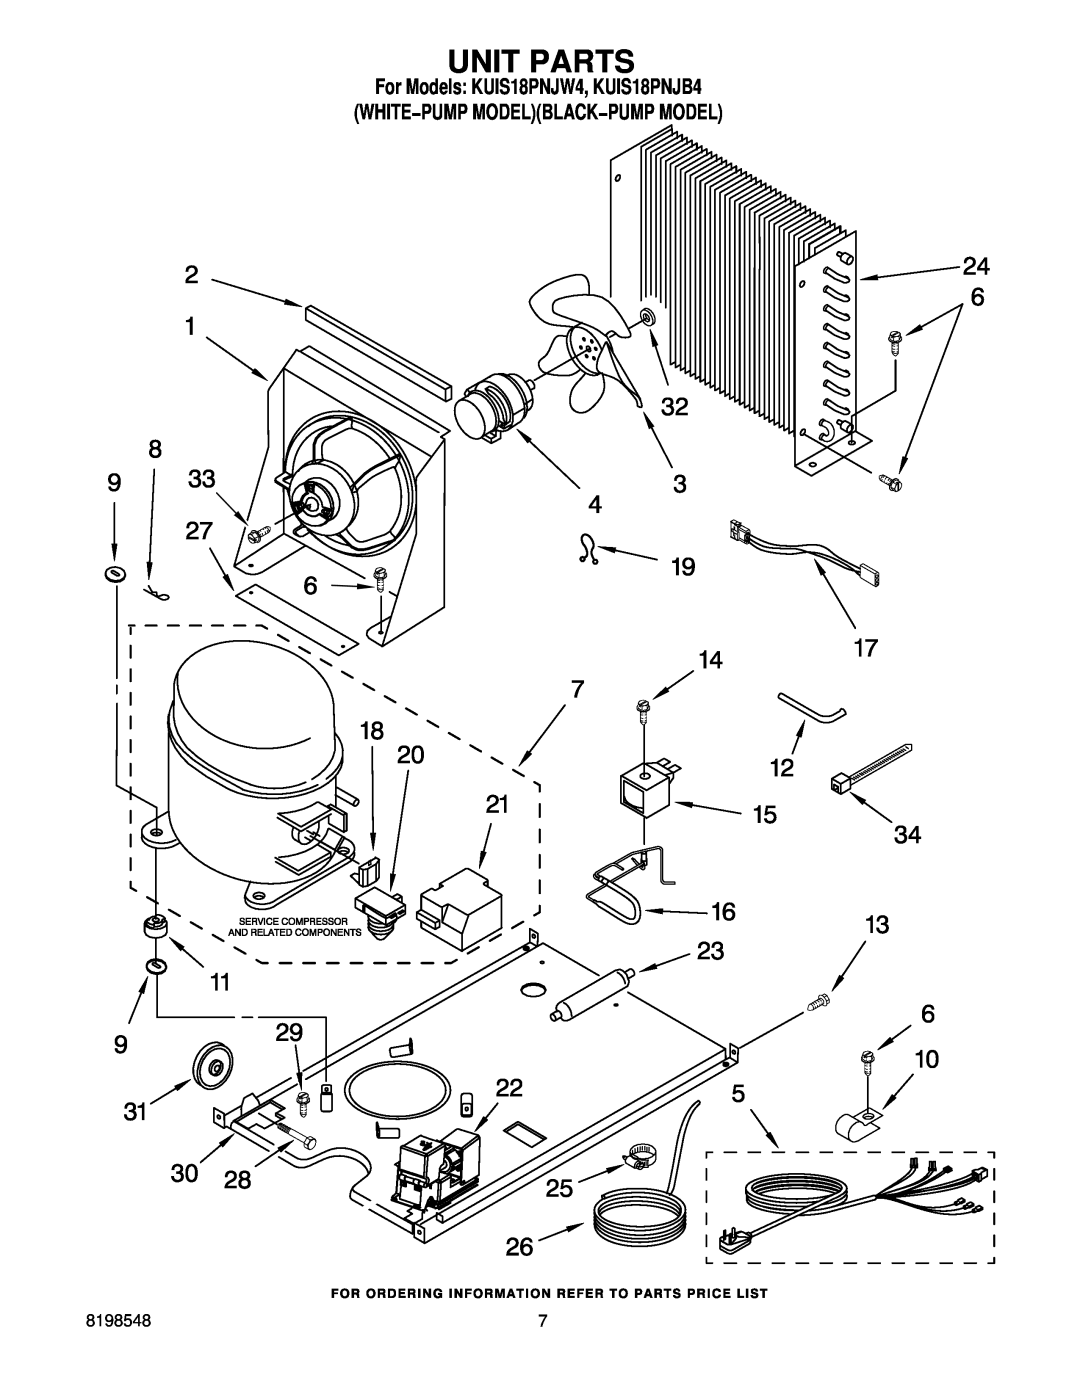 KitchenAid manual Unit Parts, For Models KUIS18PNJW4, KUIS18PNJB4 WHITE−PUMP MODELBLACK−PUMP MODEL 